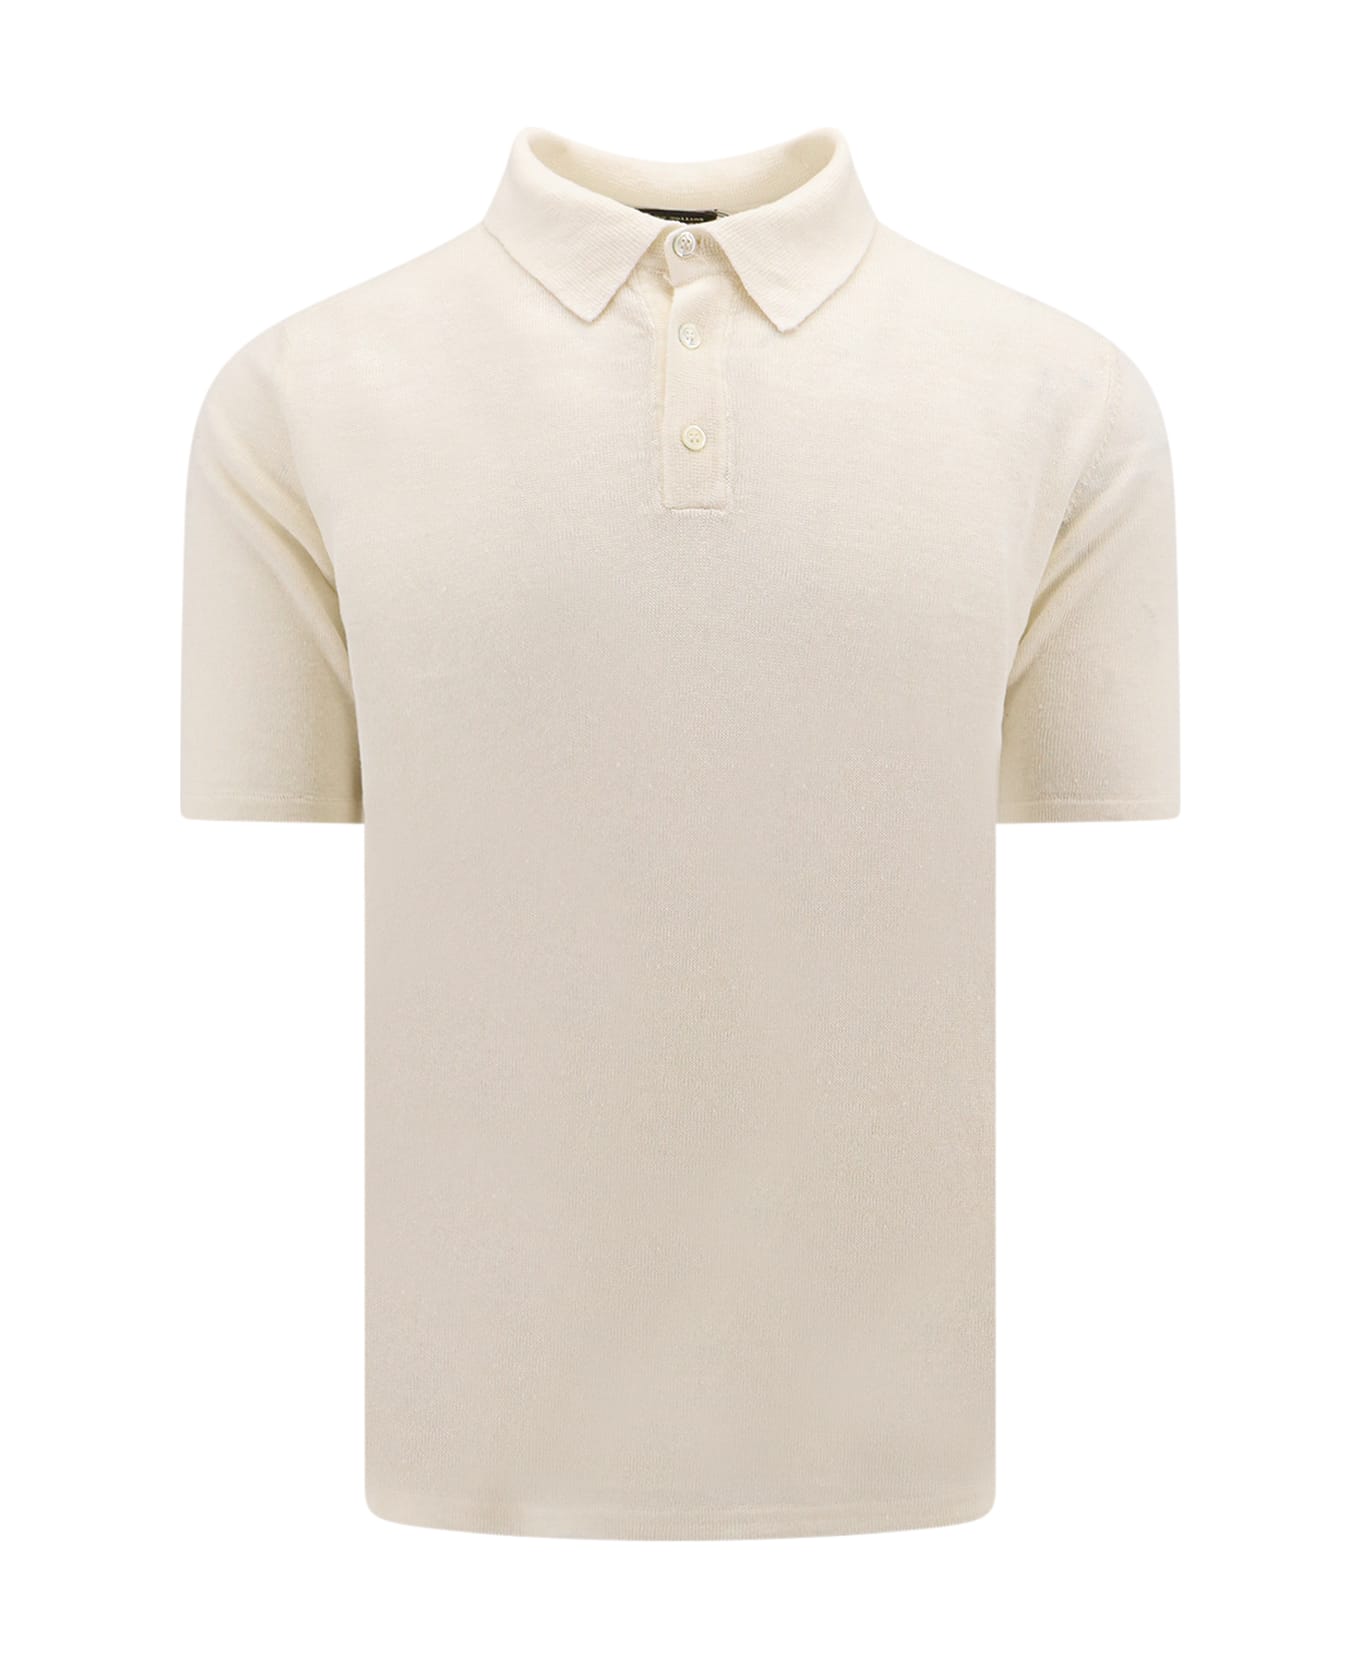 Roberto Collina Polo Shirt - White ポロシャツ